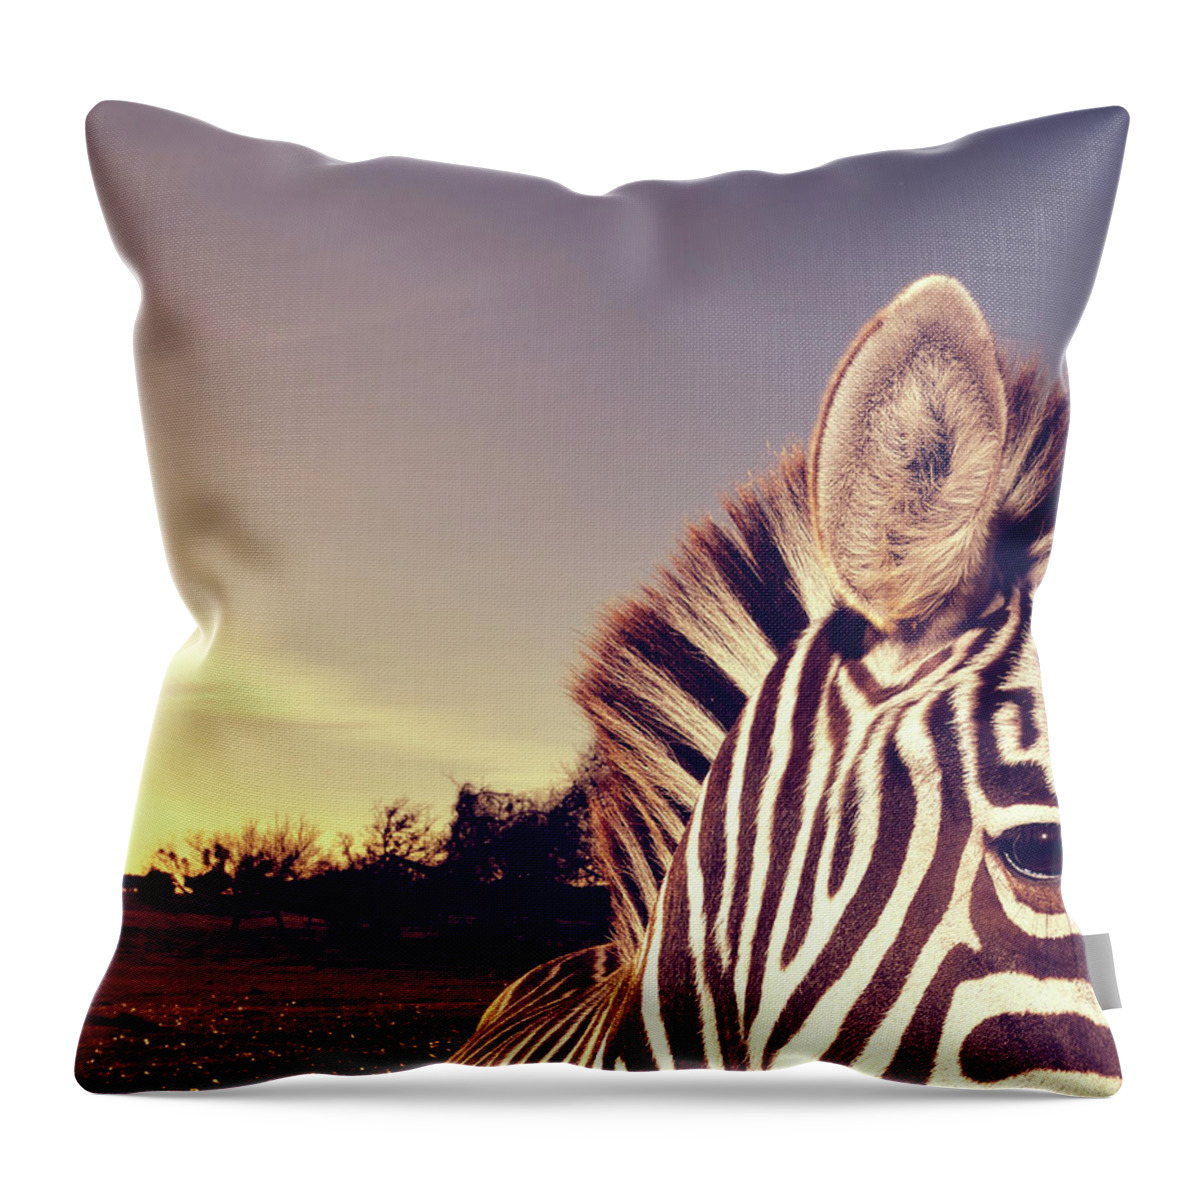 Animal Themes Throw Pillow featuring the photograph Zebra Sunset by Flashbax Twenty Three Photography